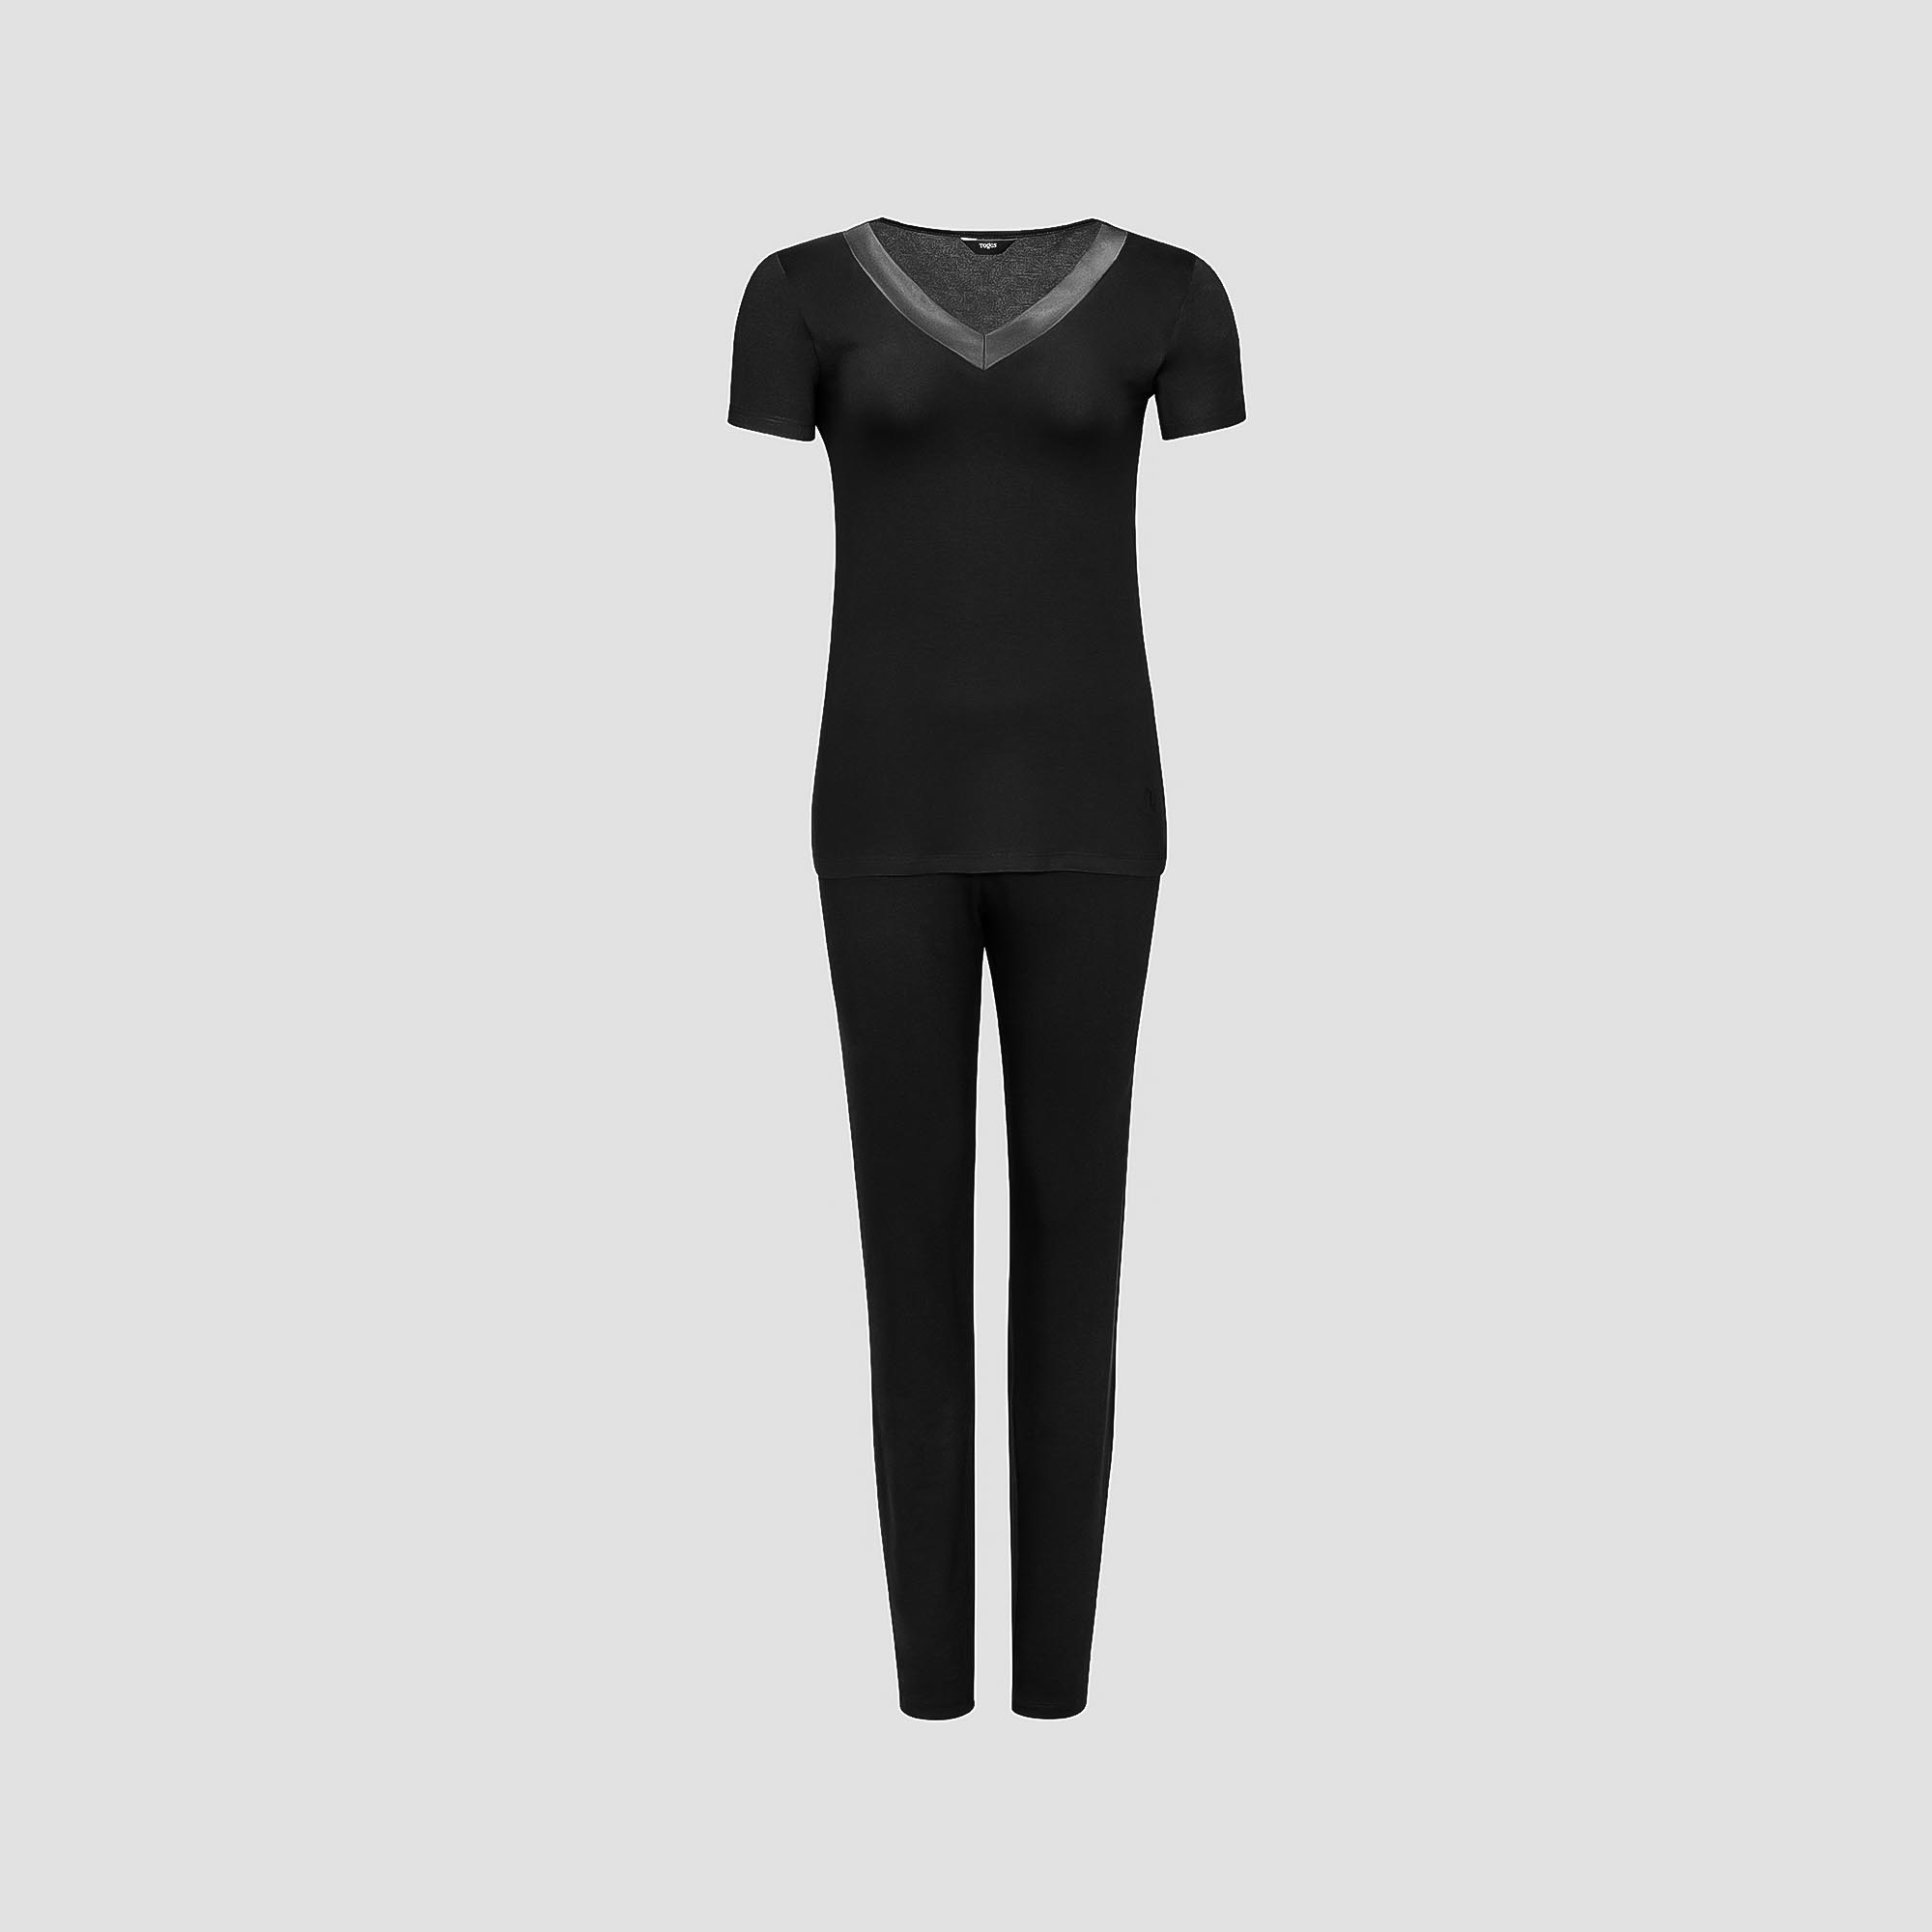 Пижама Togas Ингелла черная женская L(48) 2 предмета пижама футболка